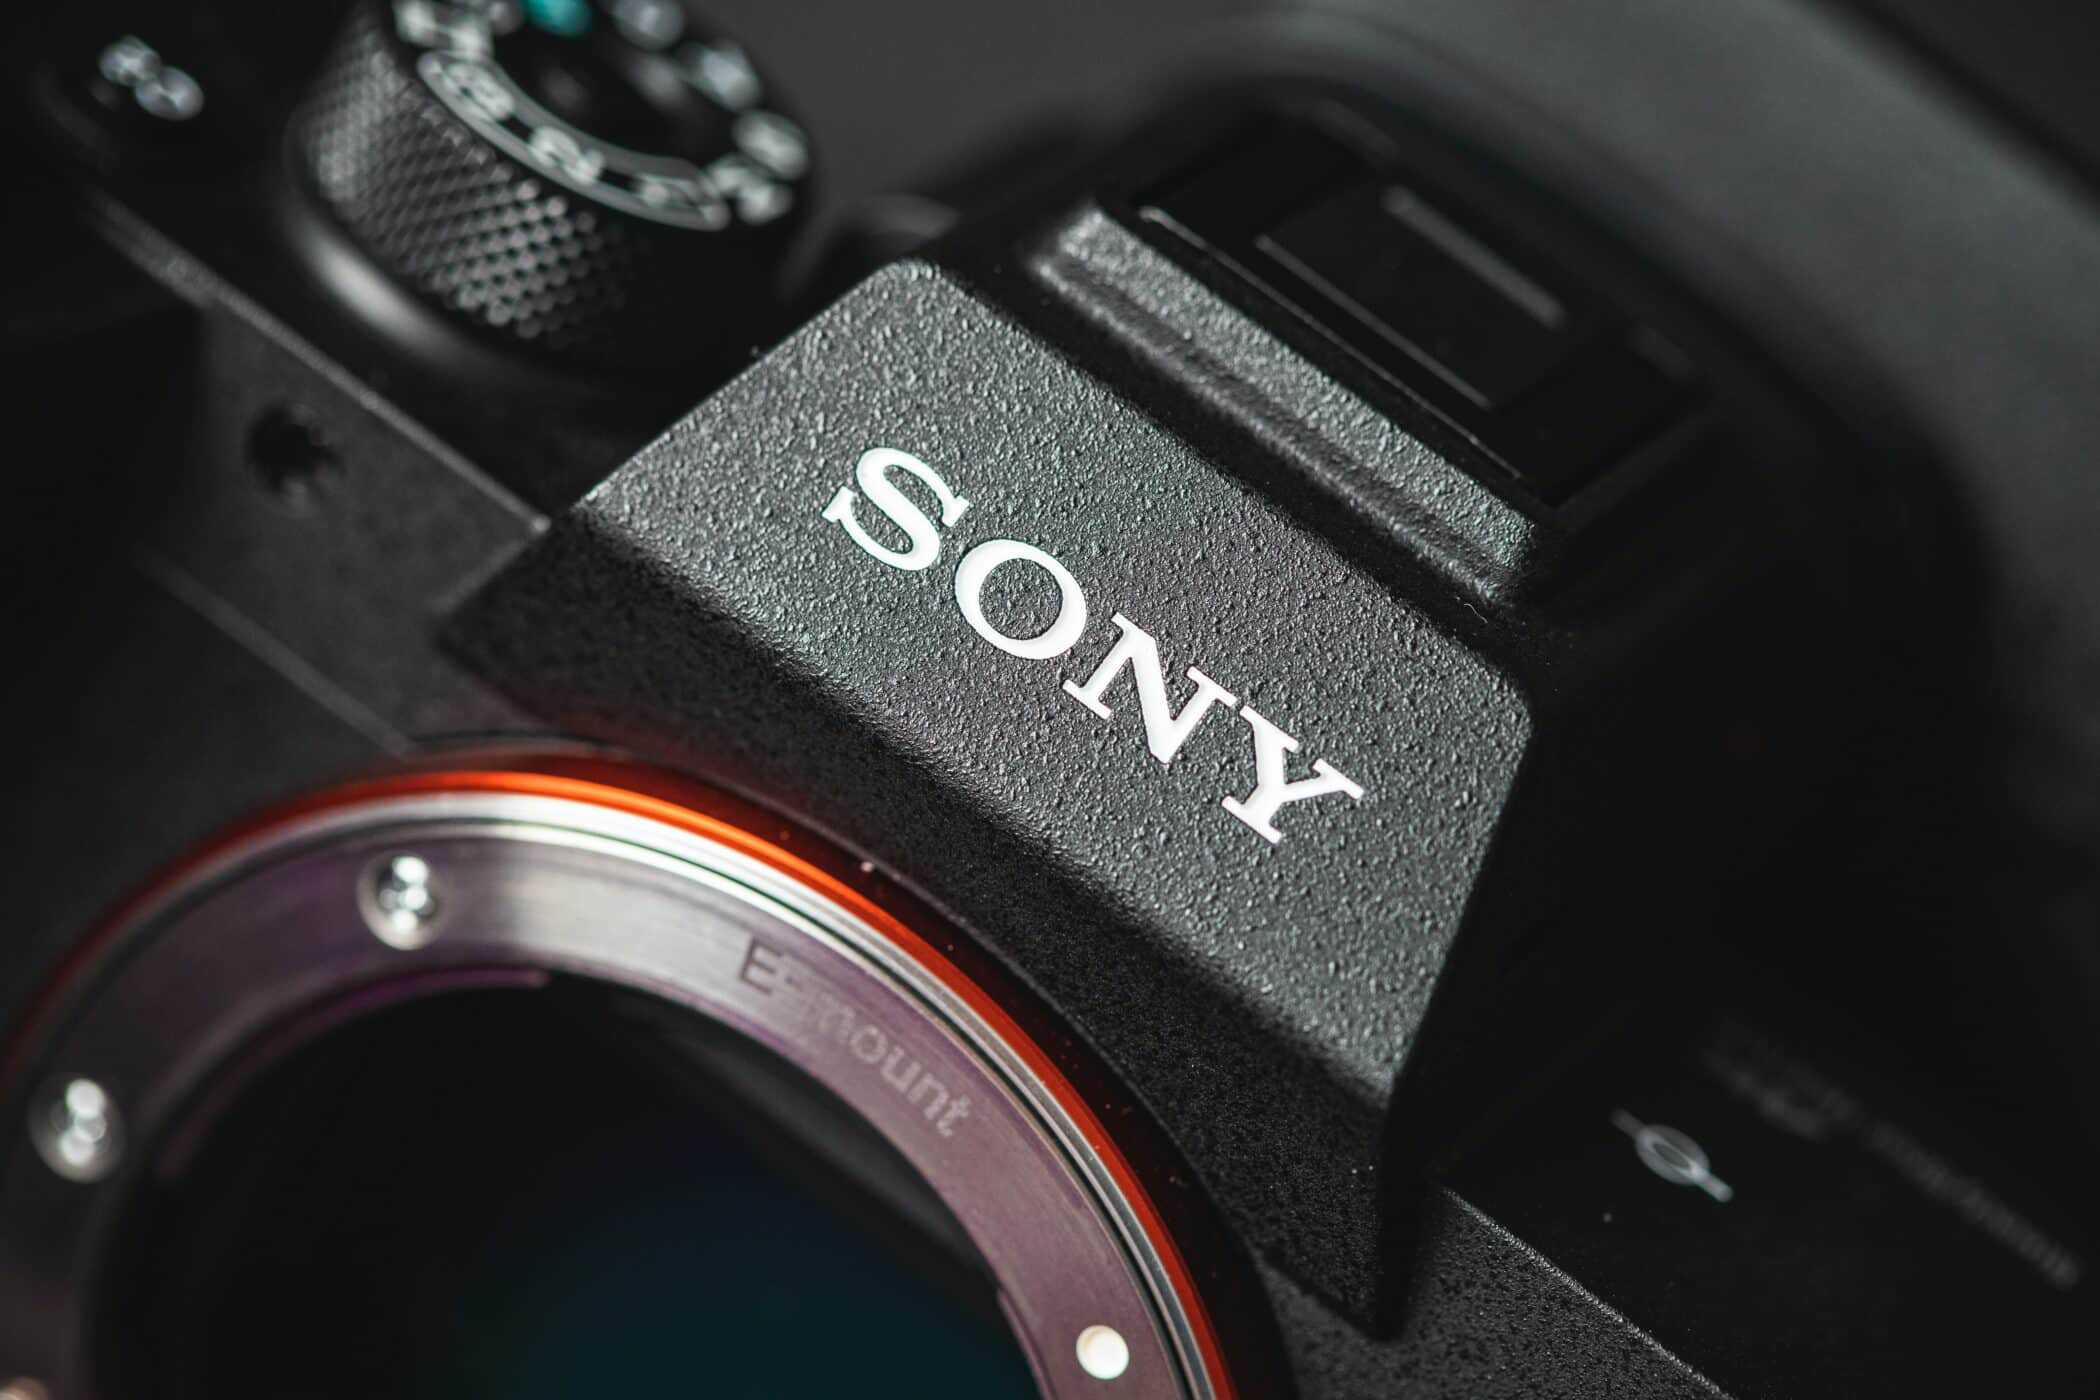 Sony、ミラーレスカメラ「α」で撮影画像の真正性を担保する追加機能の検証を完了、来春からファームウェア提供へ